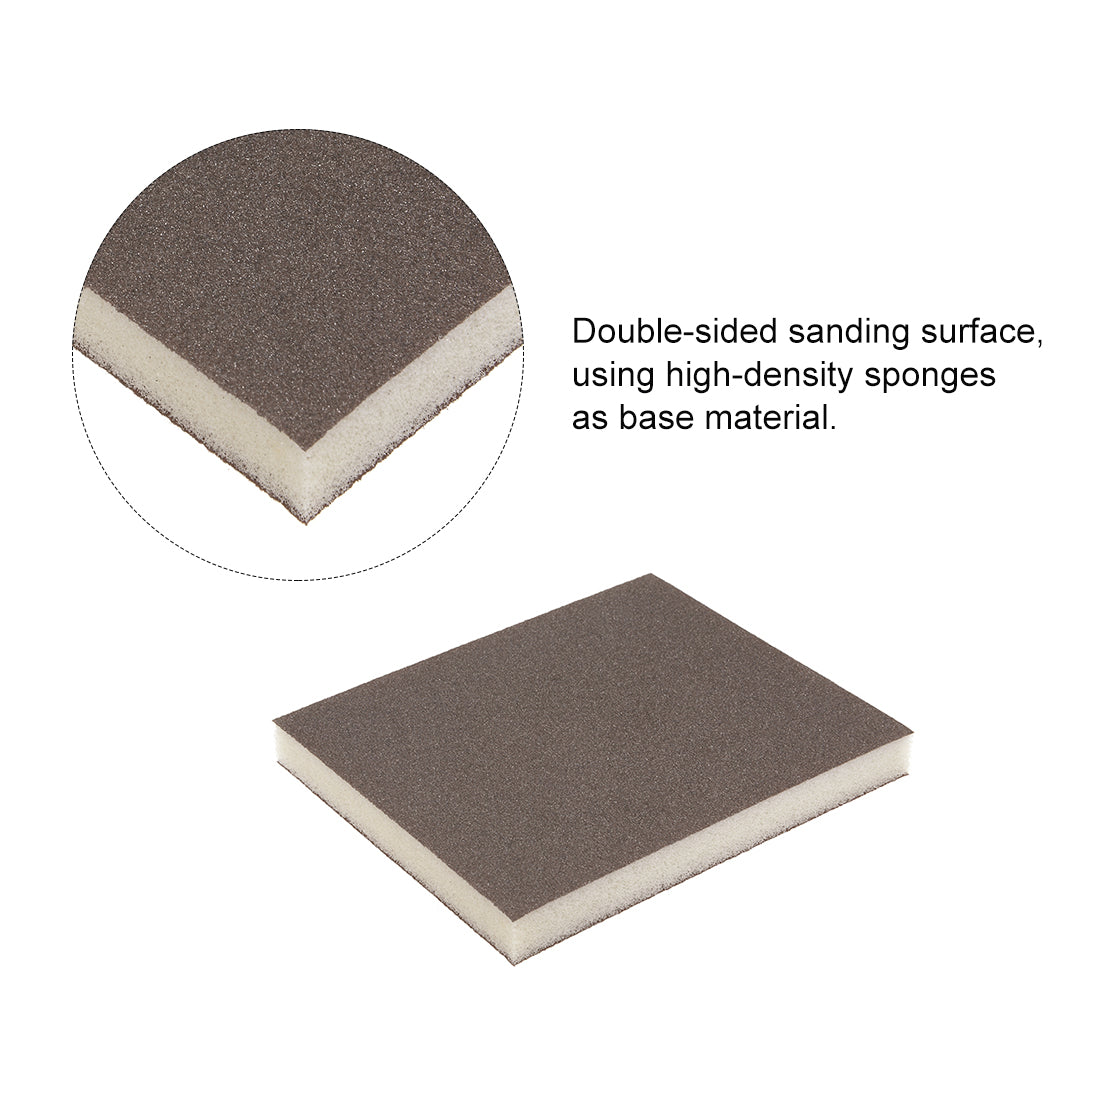 uxcell Uxcell Sanding Sponge, Medium Grit 120 Grit Sanding Block Pad, 120 x 98 x 12mm Size 4pcs